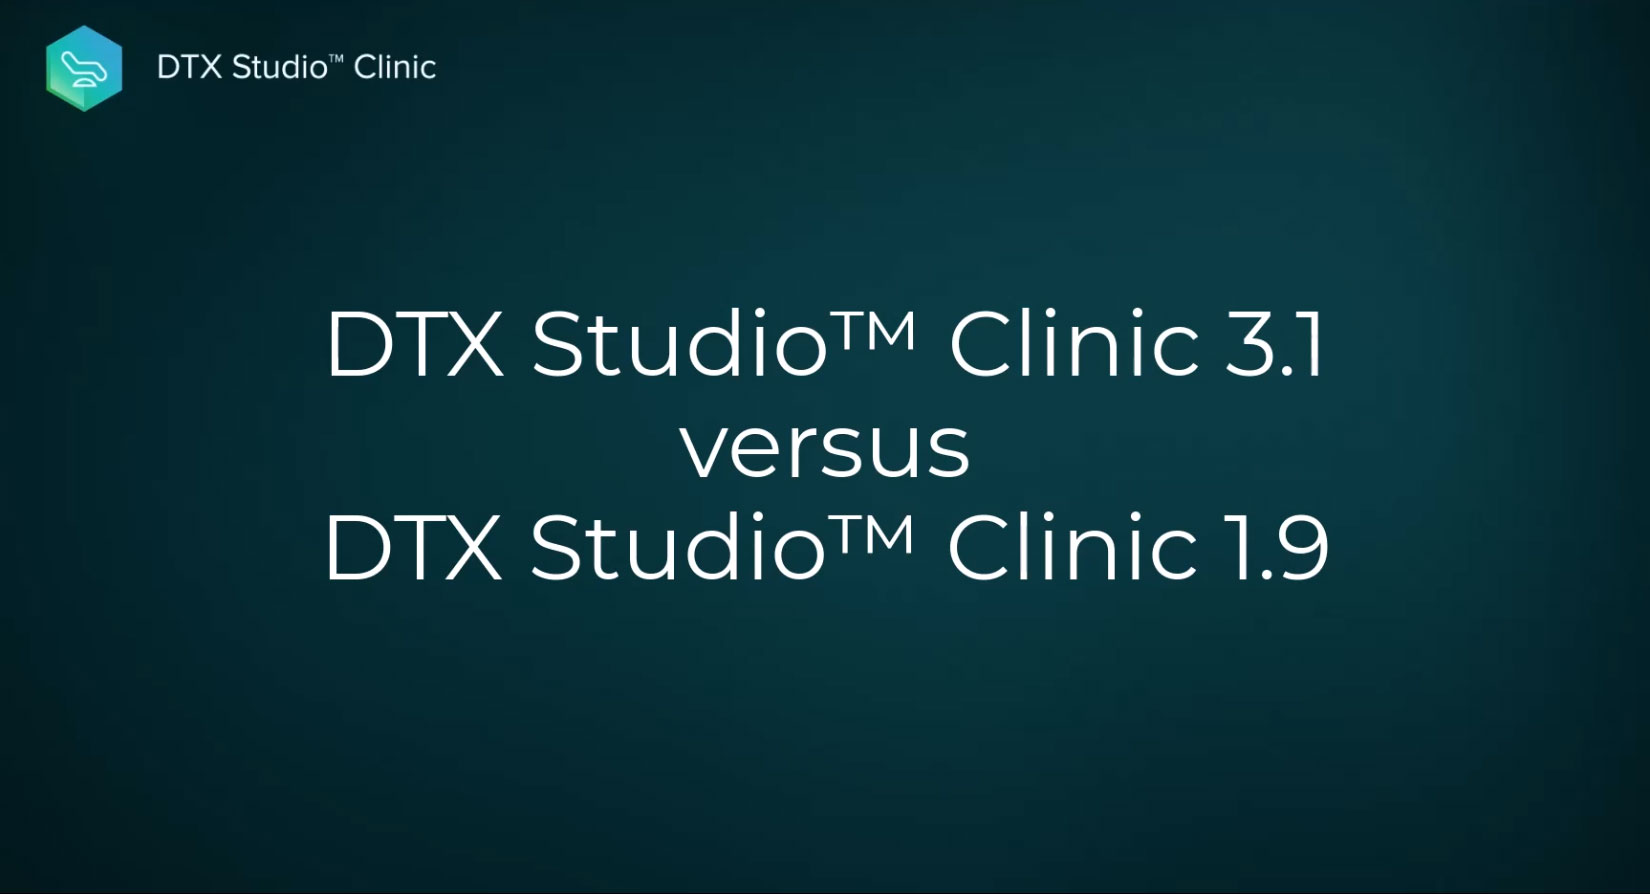 Highlights DTX Studio Clinic 3.1 versus DTX Studio Clinic 1.9